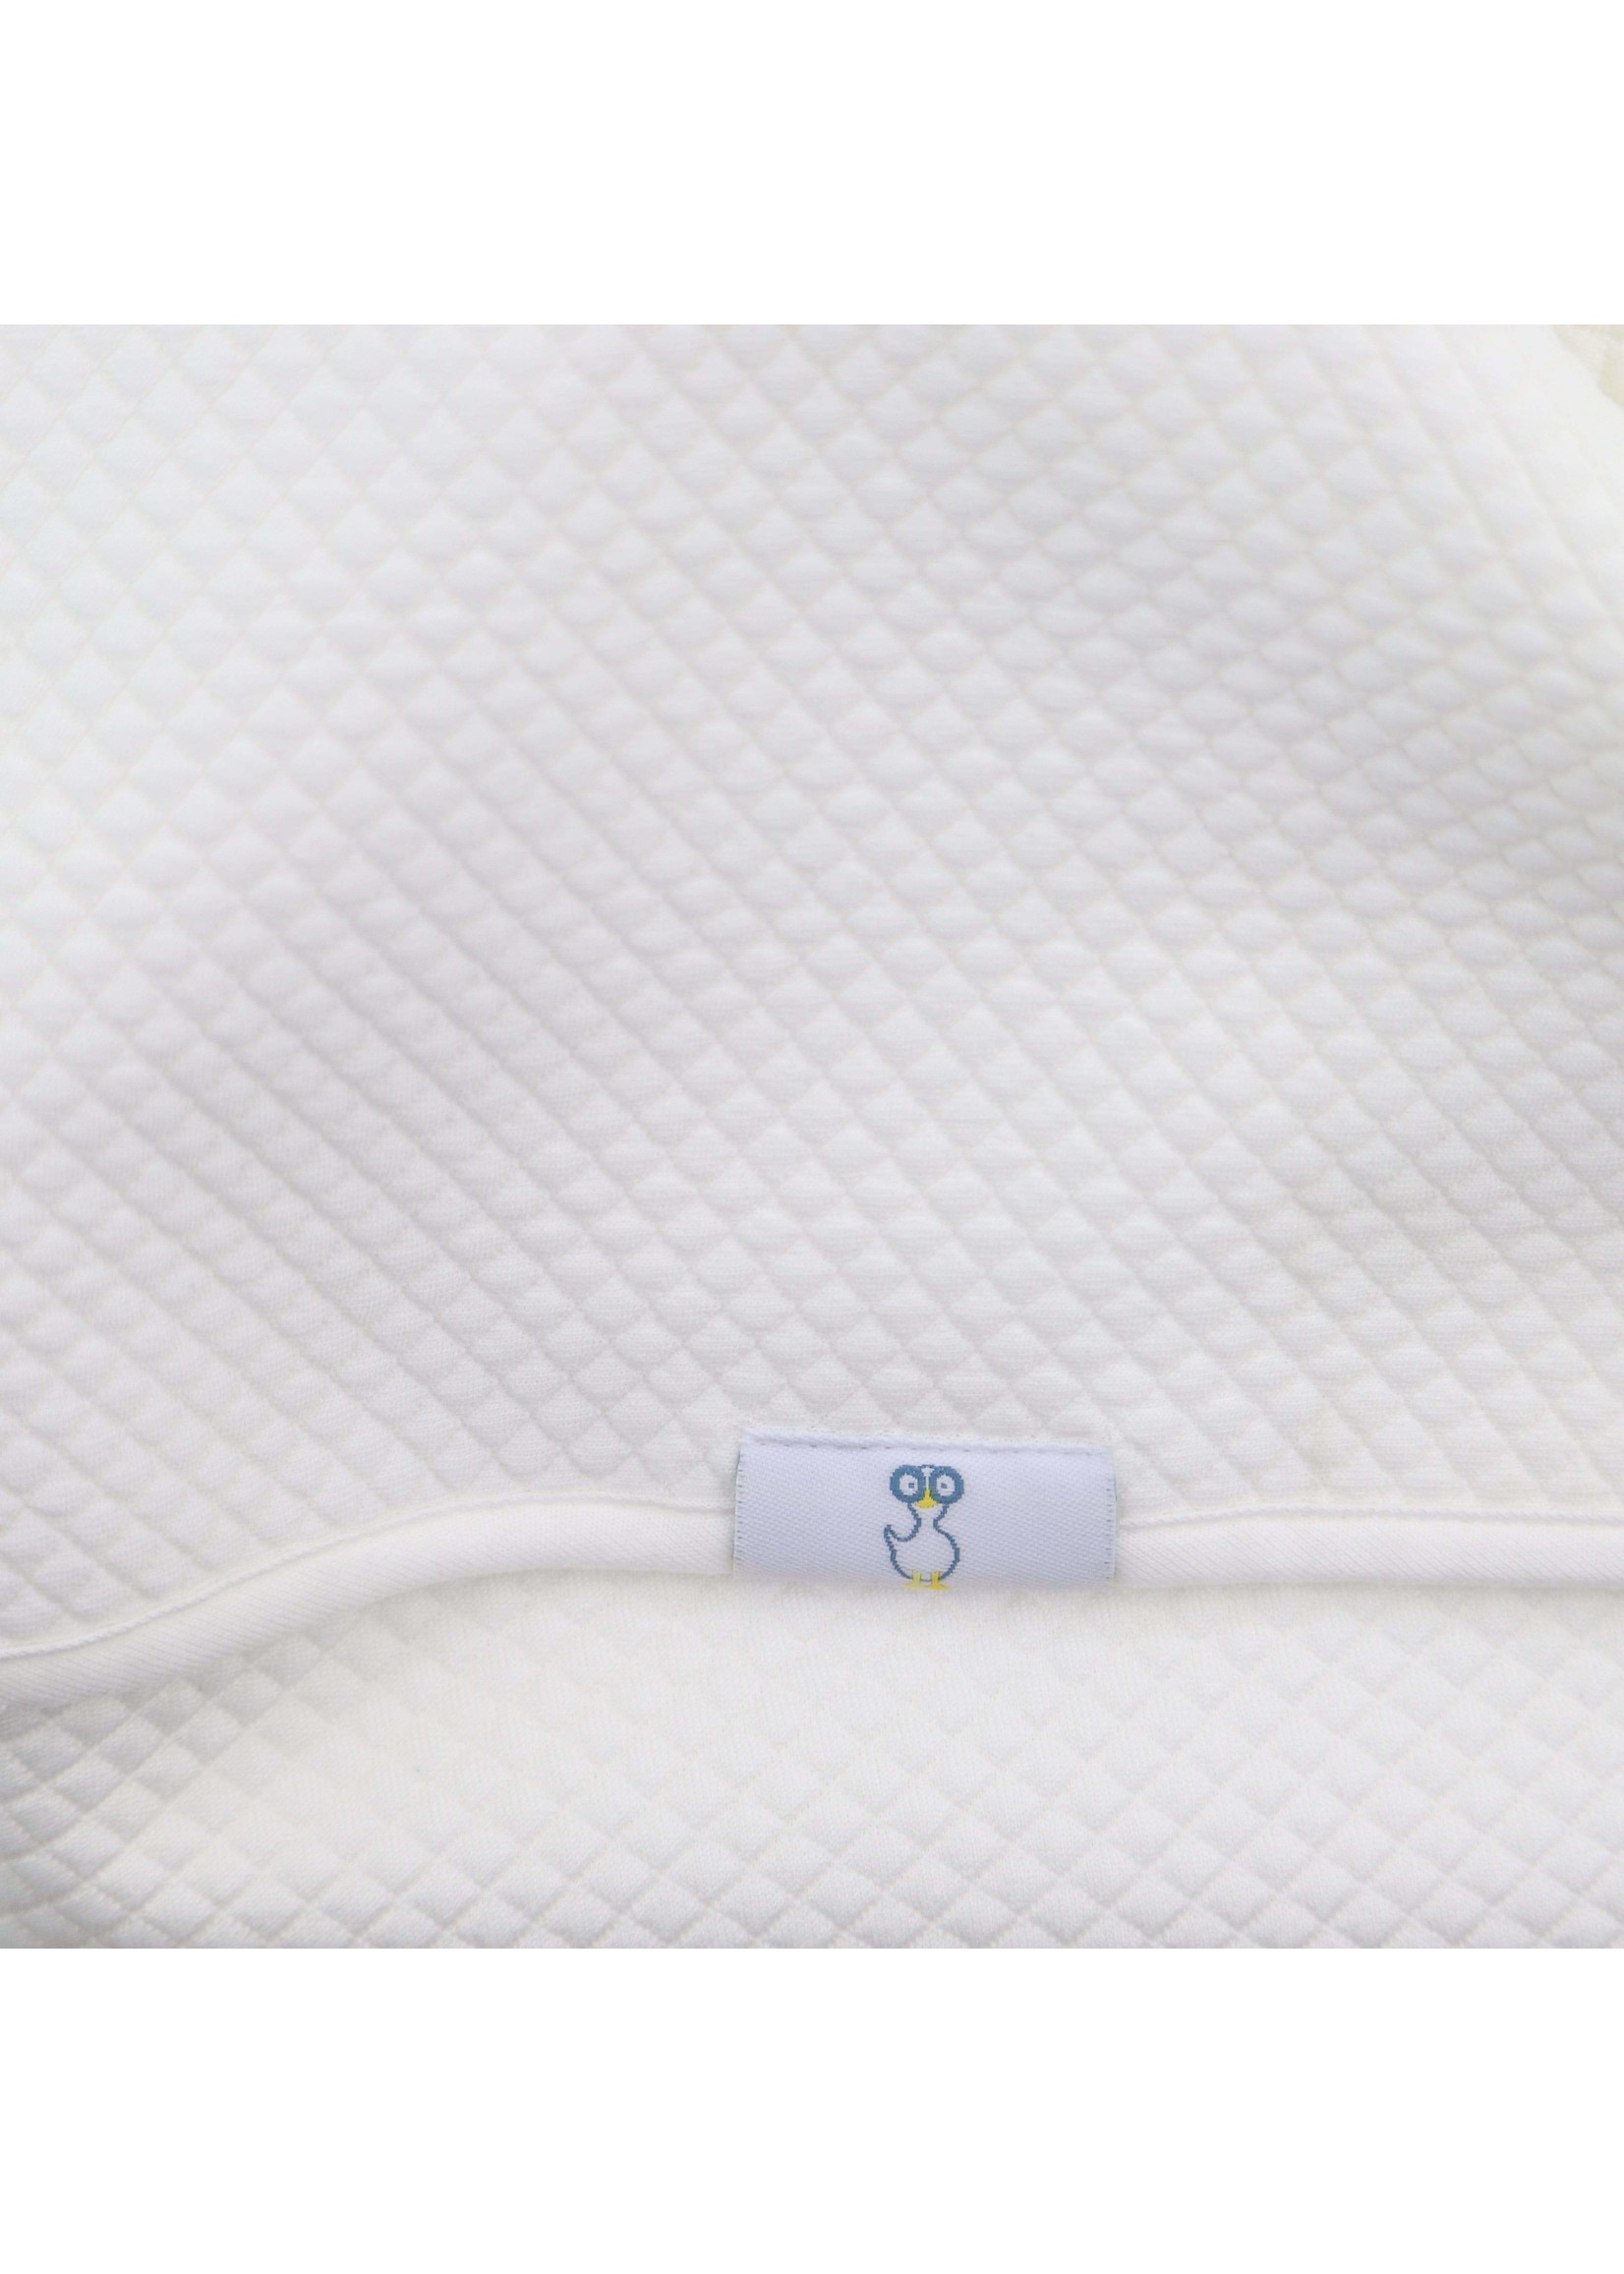 Textured White Knit Blanket